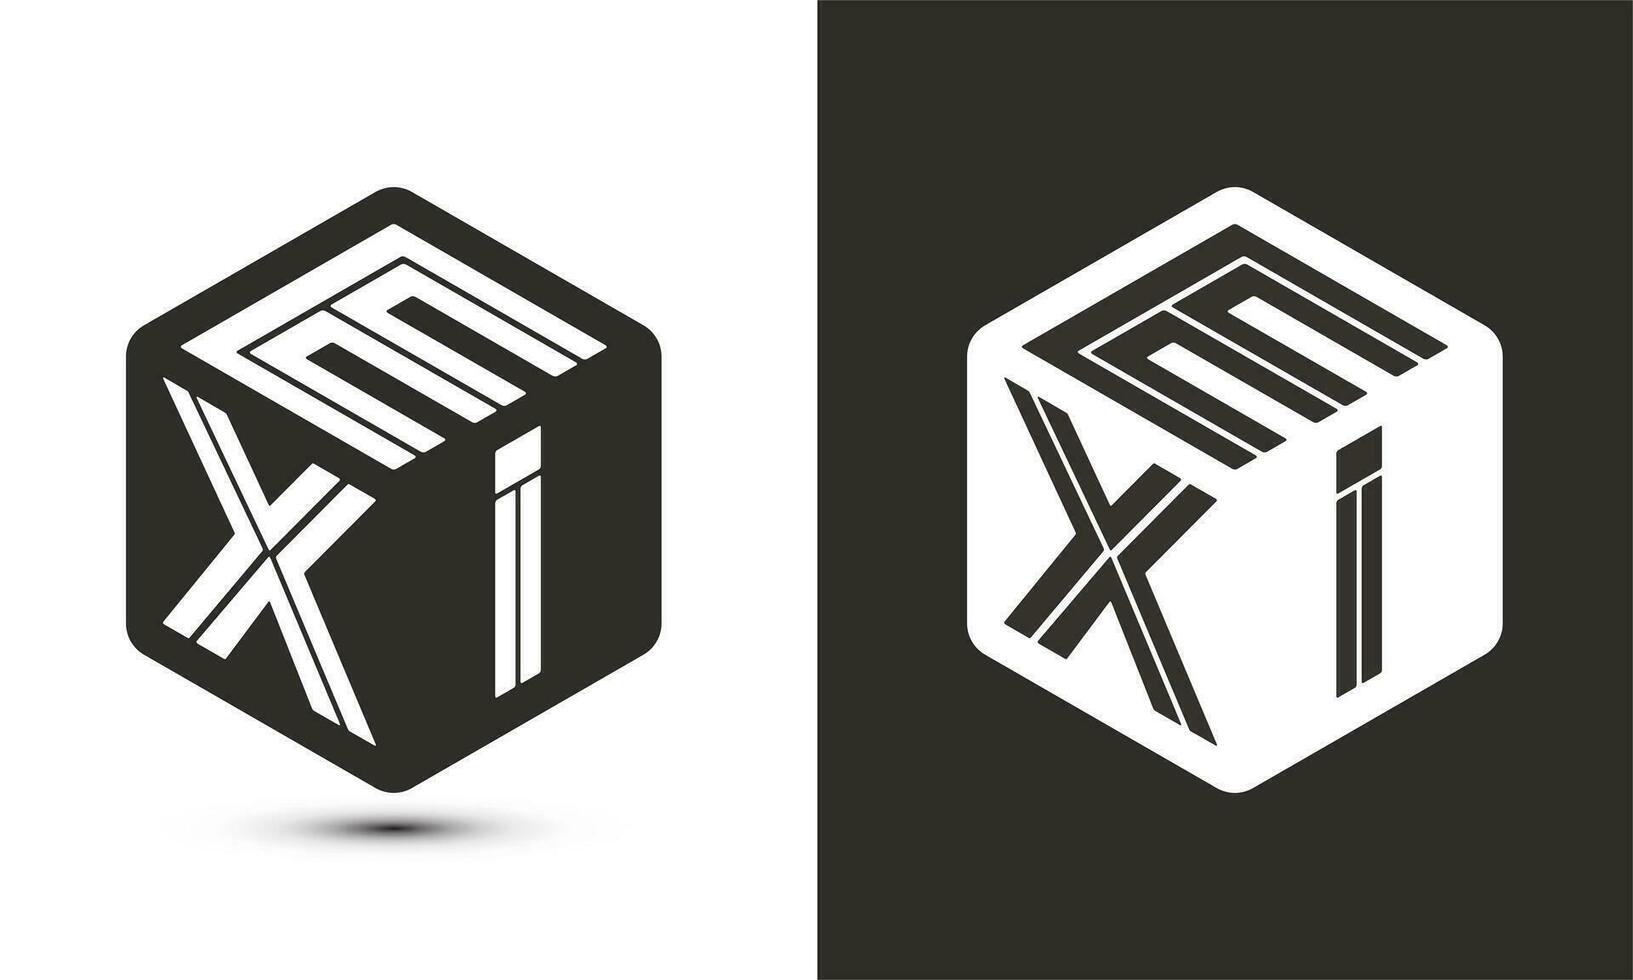 exí letra logo diseño con ilustrador cubo logo, vector logo moderno alfabeto fuente superposición estilo.